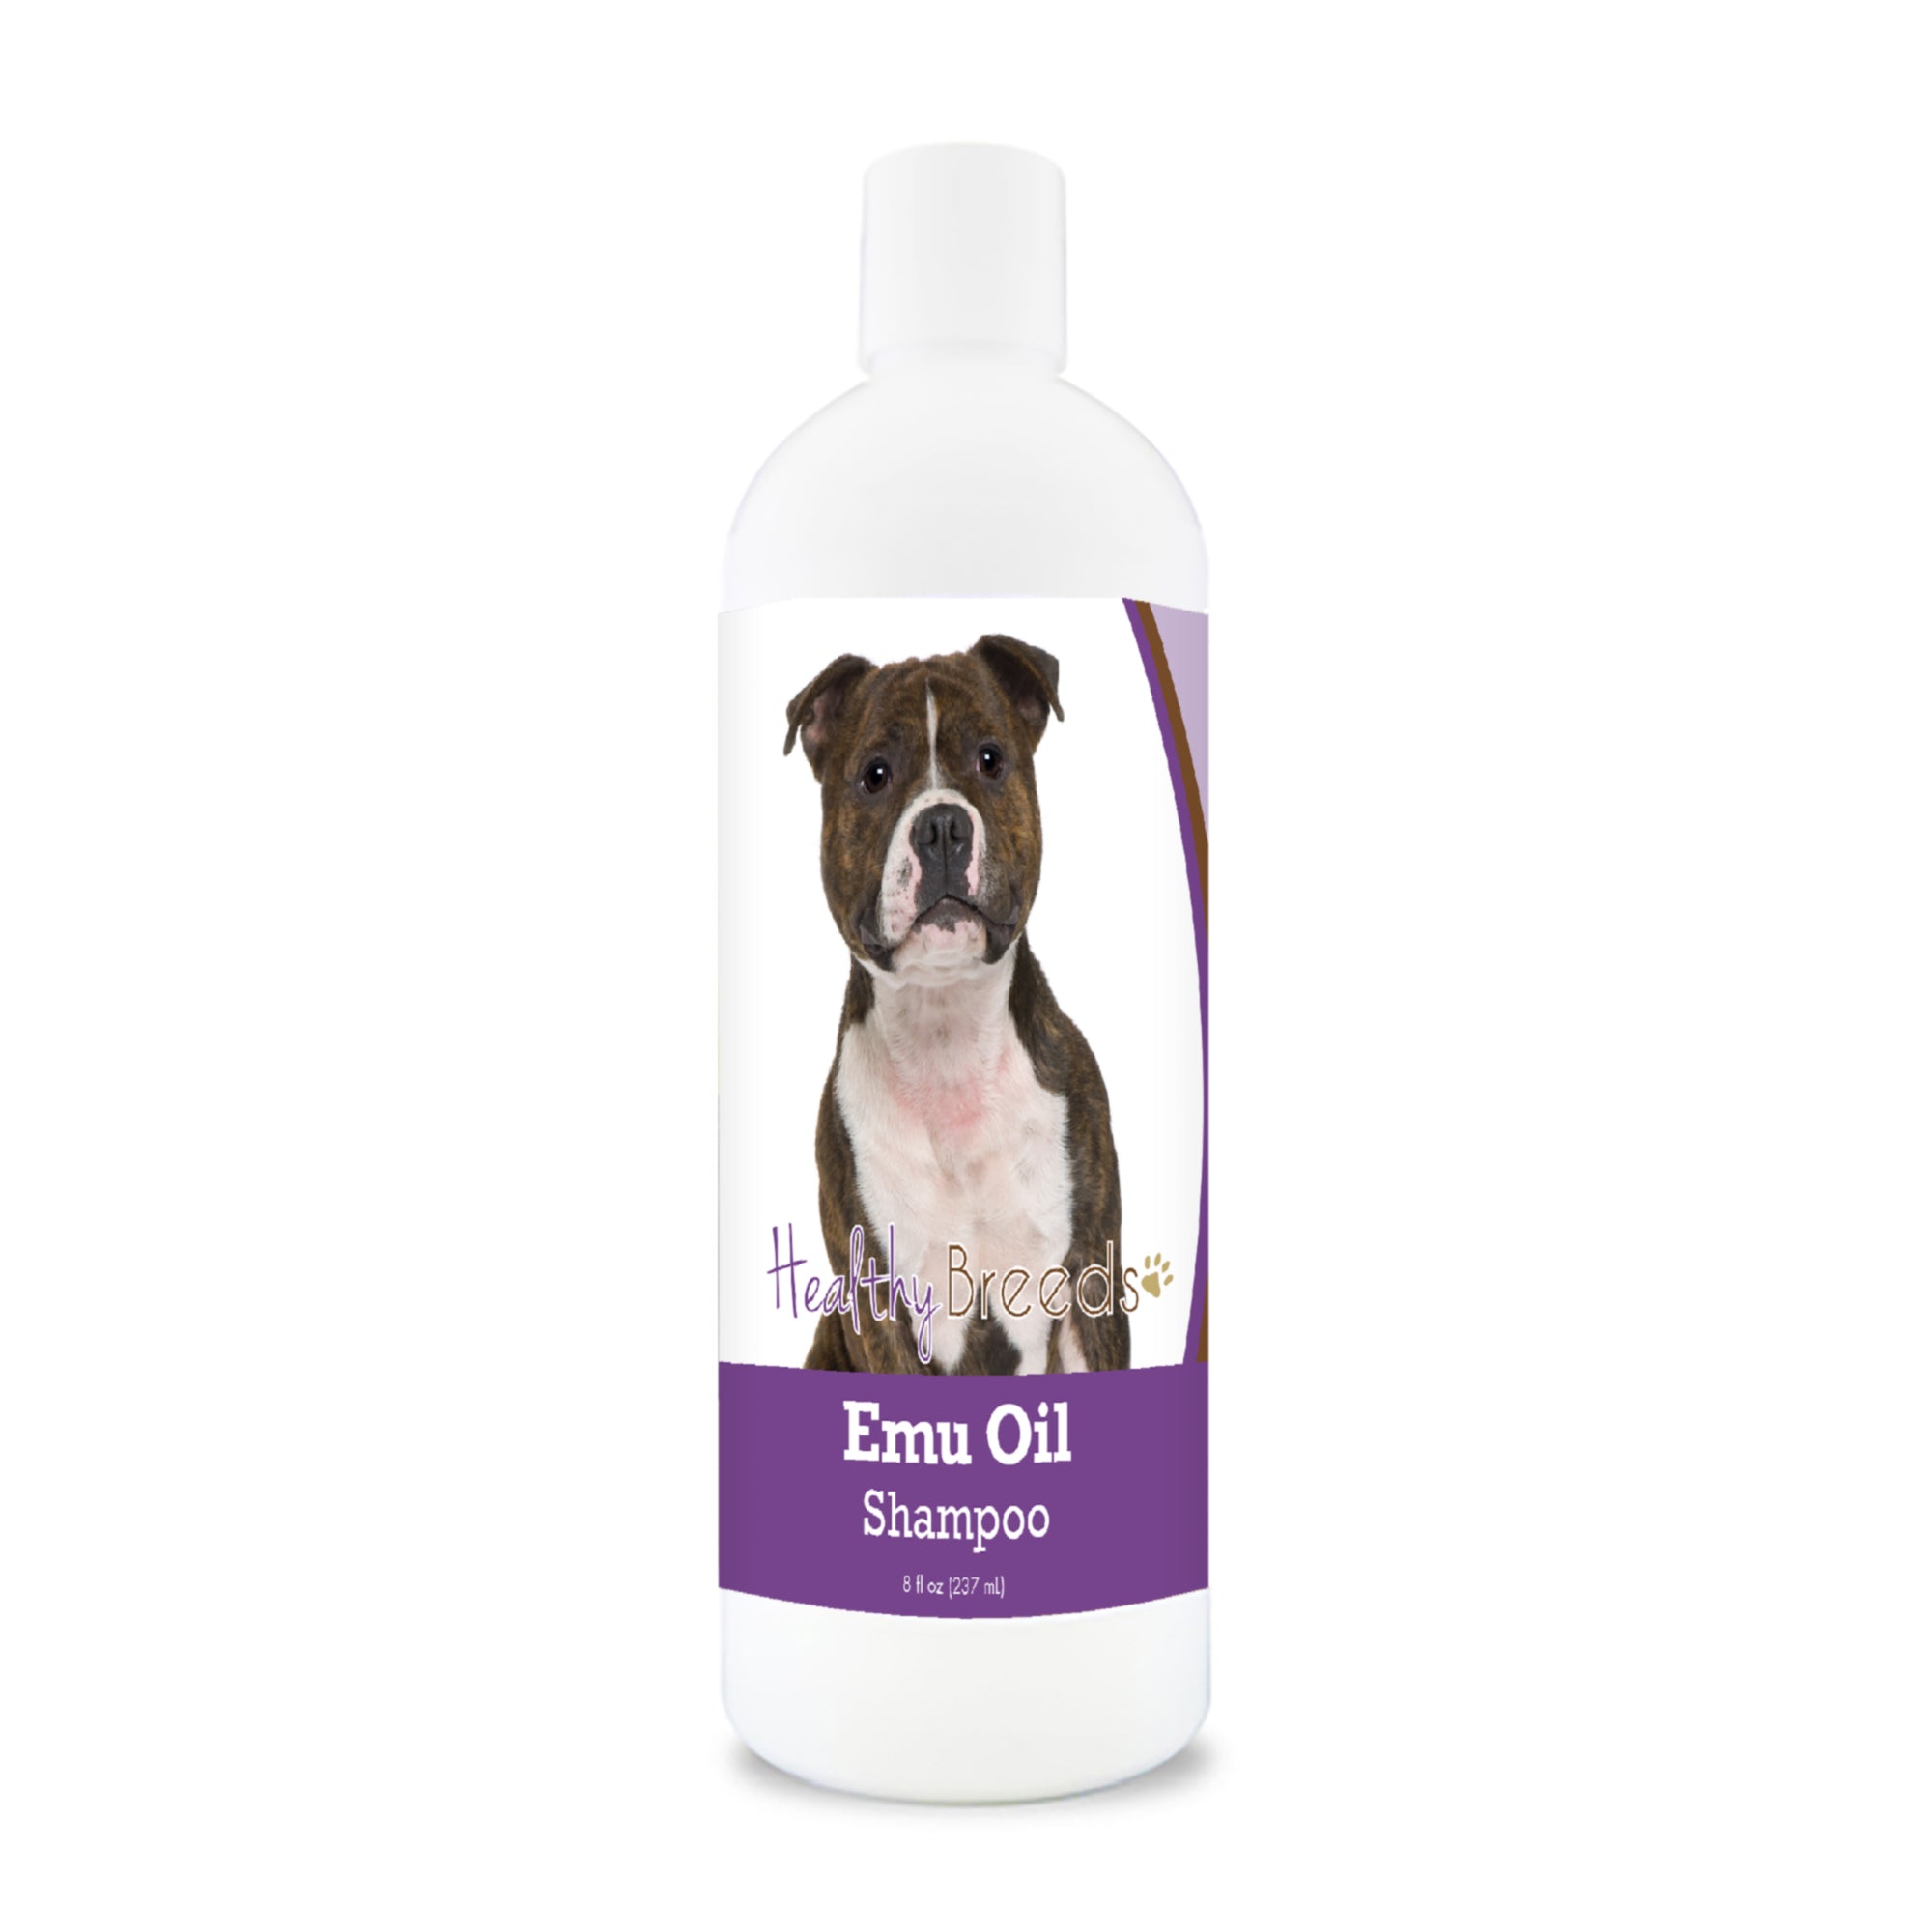 Staffordshire Bull Terrier Emu Oil Shampoo 8 oz